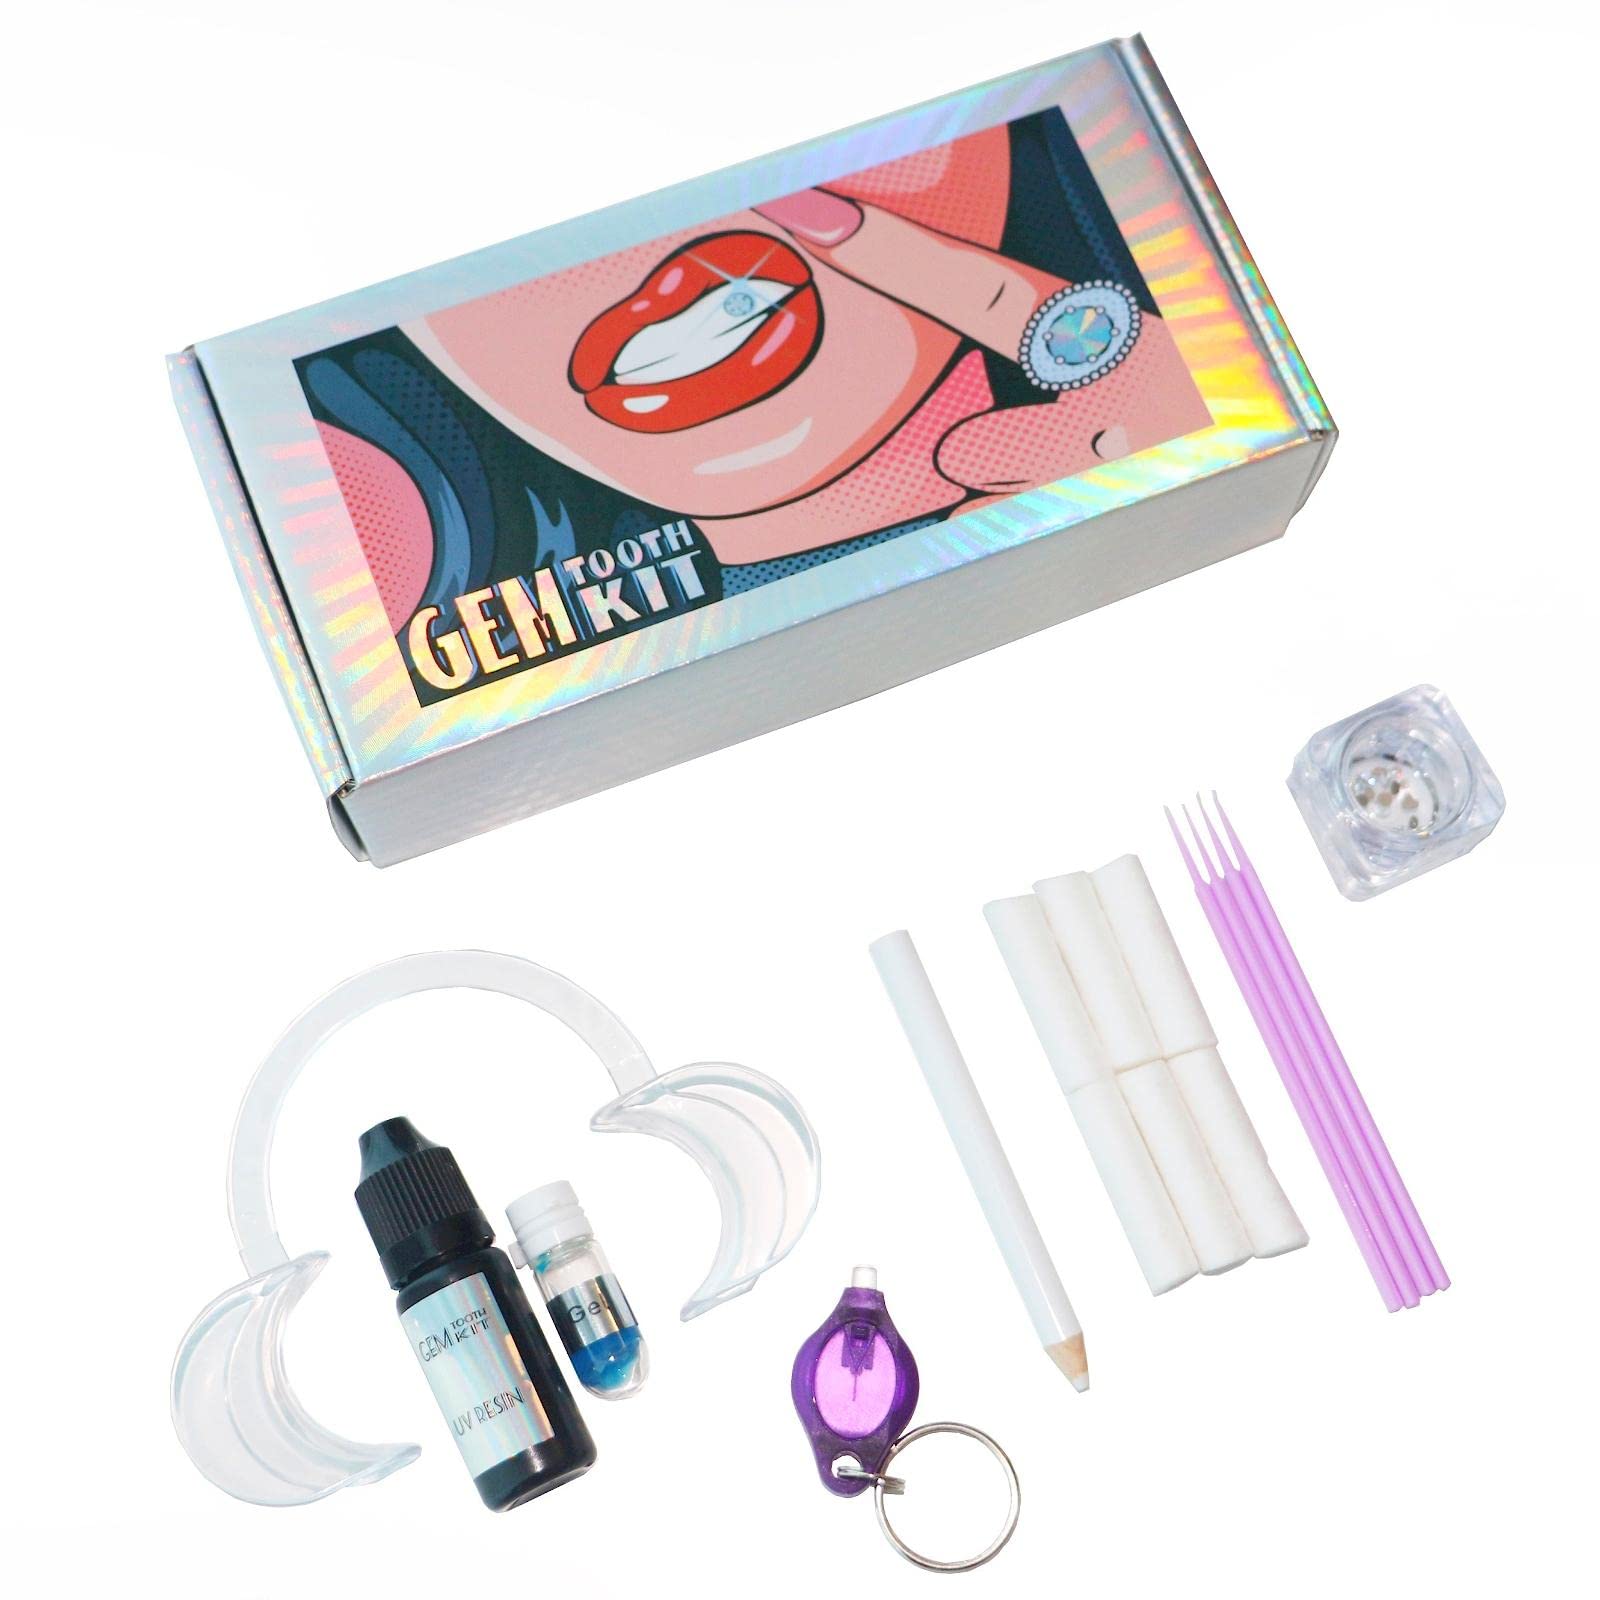 Professional DIY Tooth Gem Kit, Tooth Gem Starter Vietnam